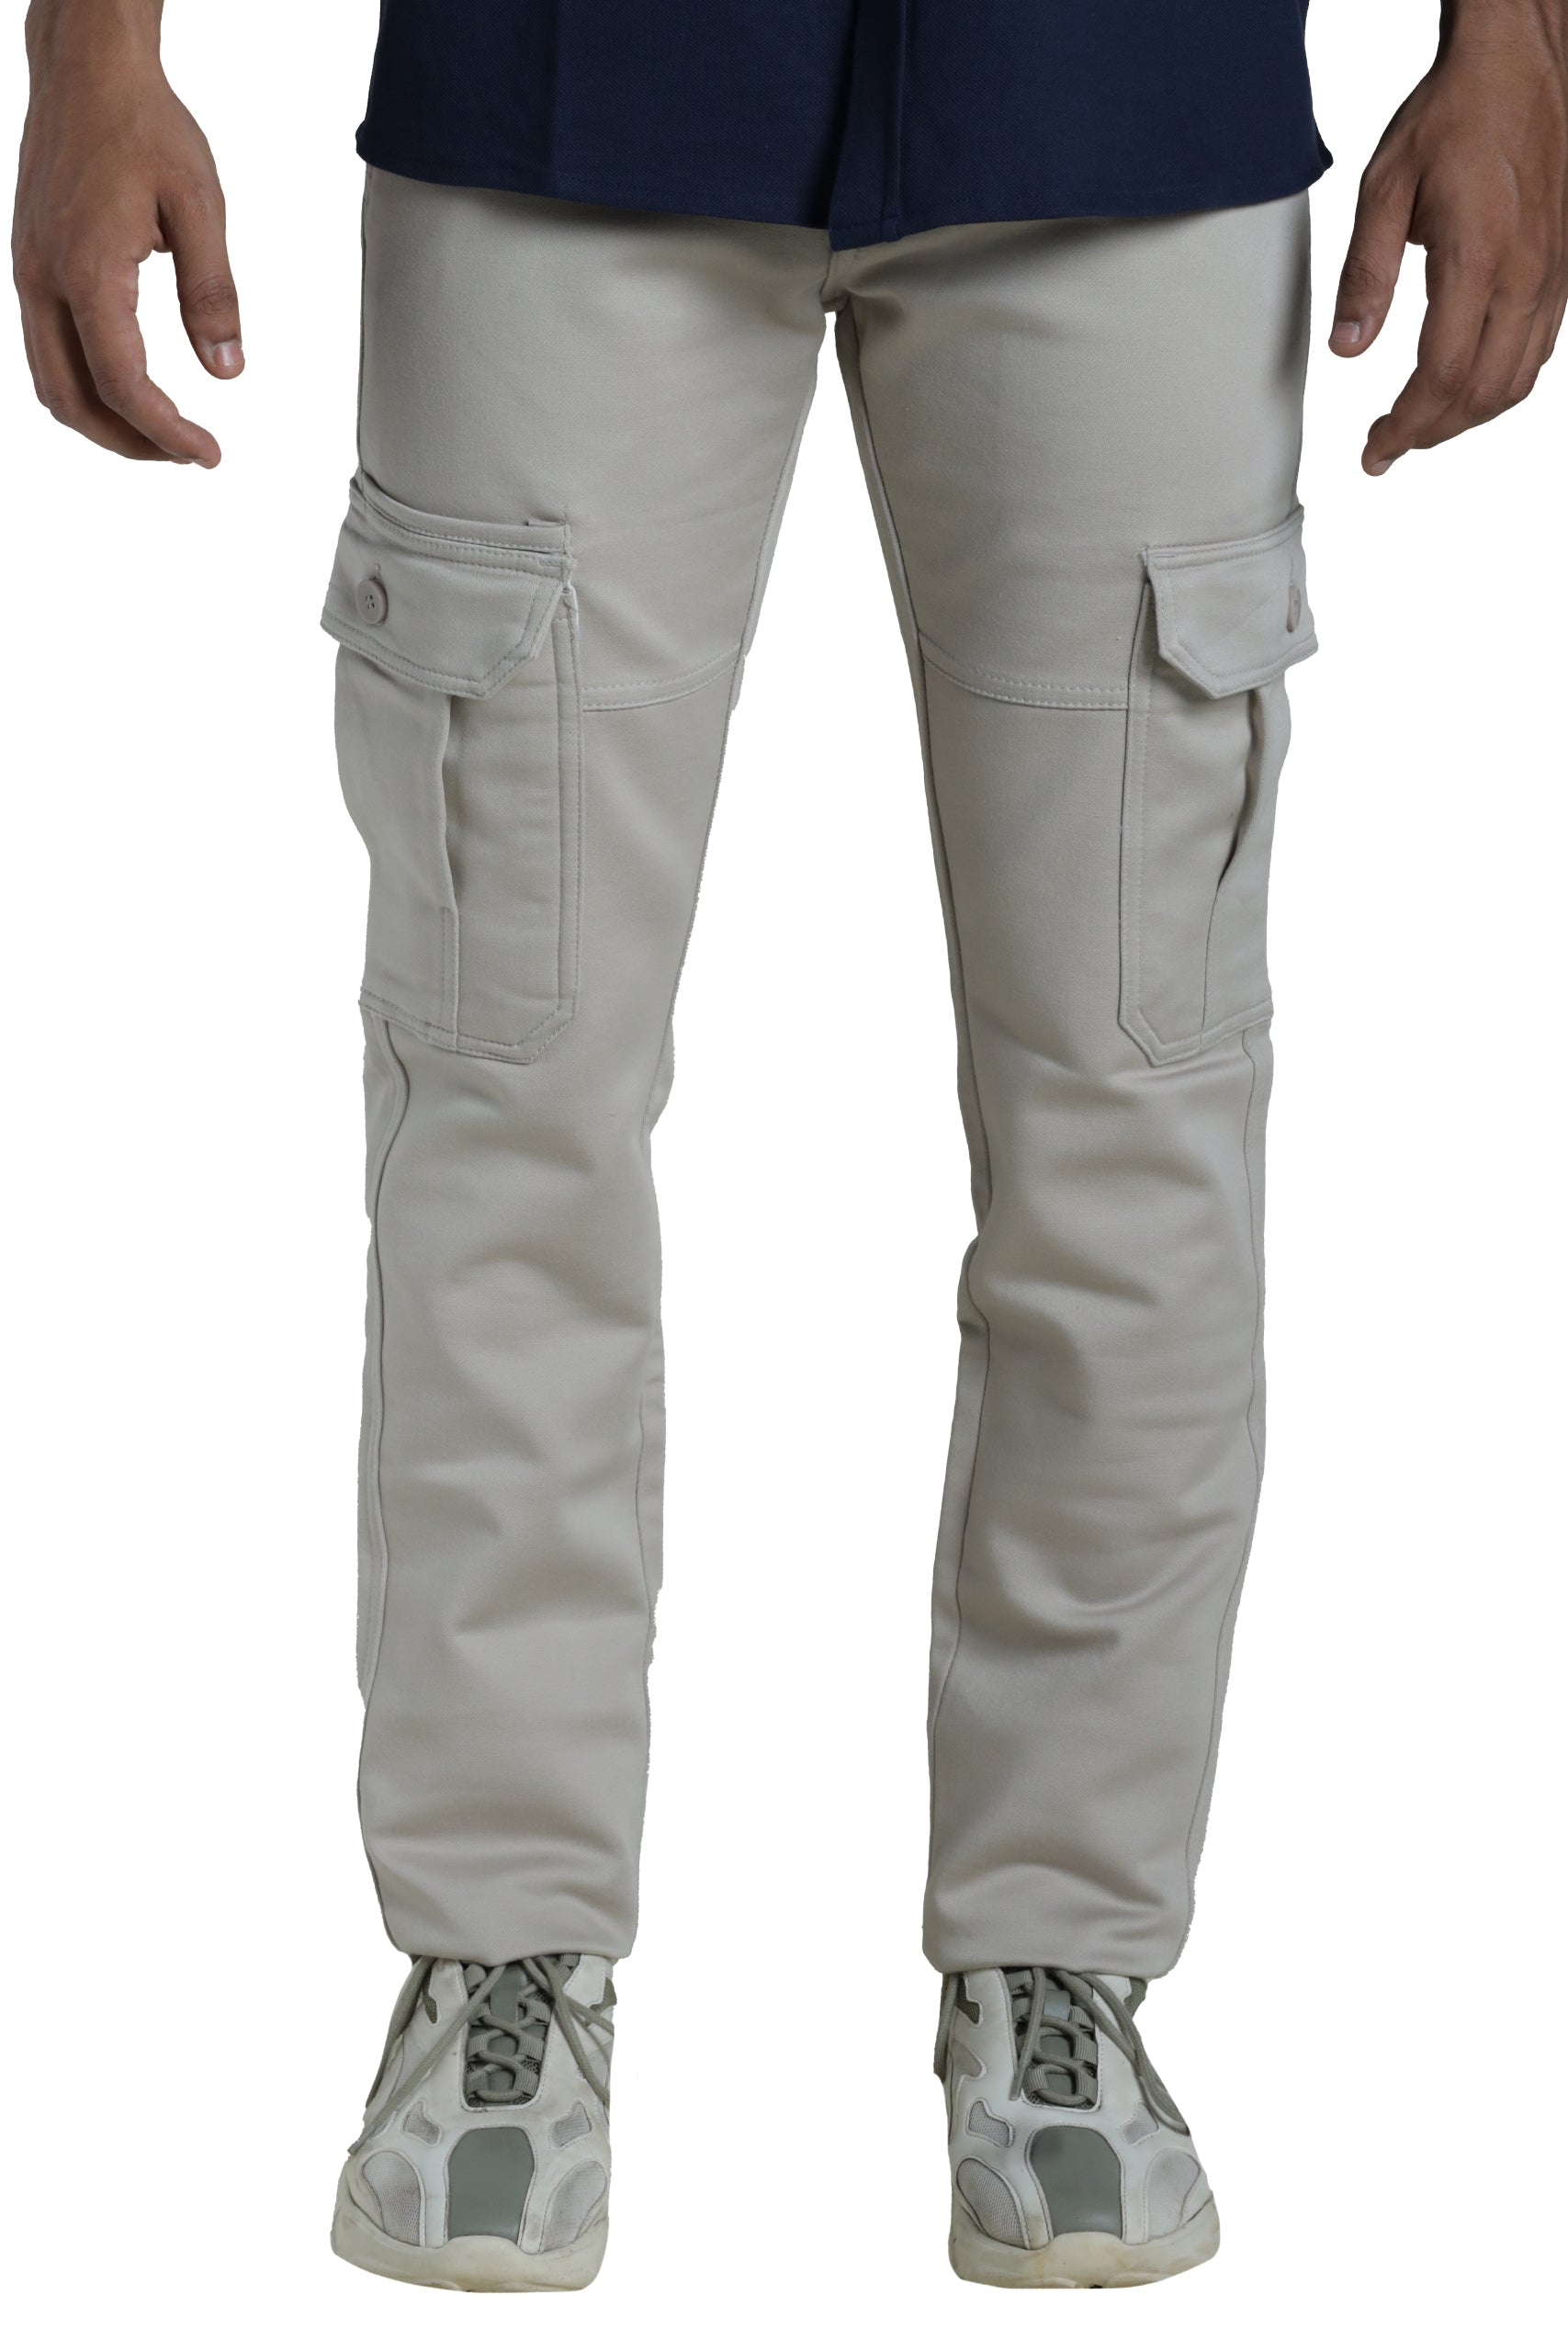 Carhartt Mens Denim Multi Pocket Denim Tech Jeans Cargo Pants Trousers   Outdoor Look